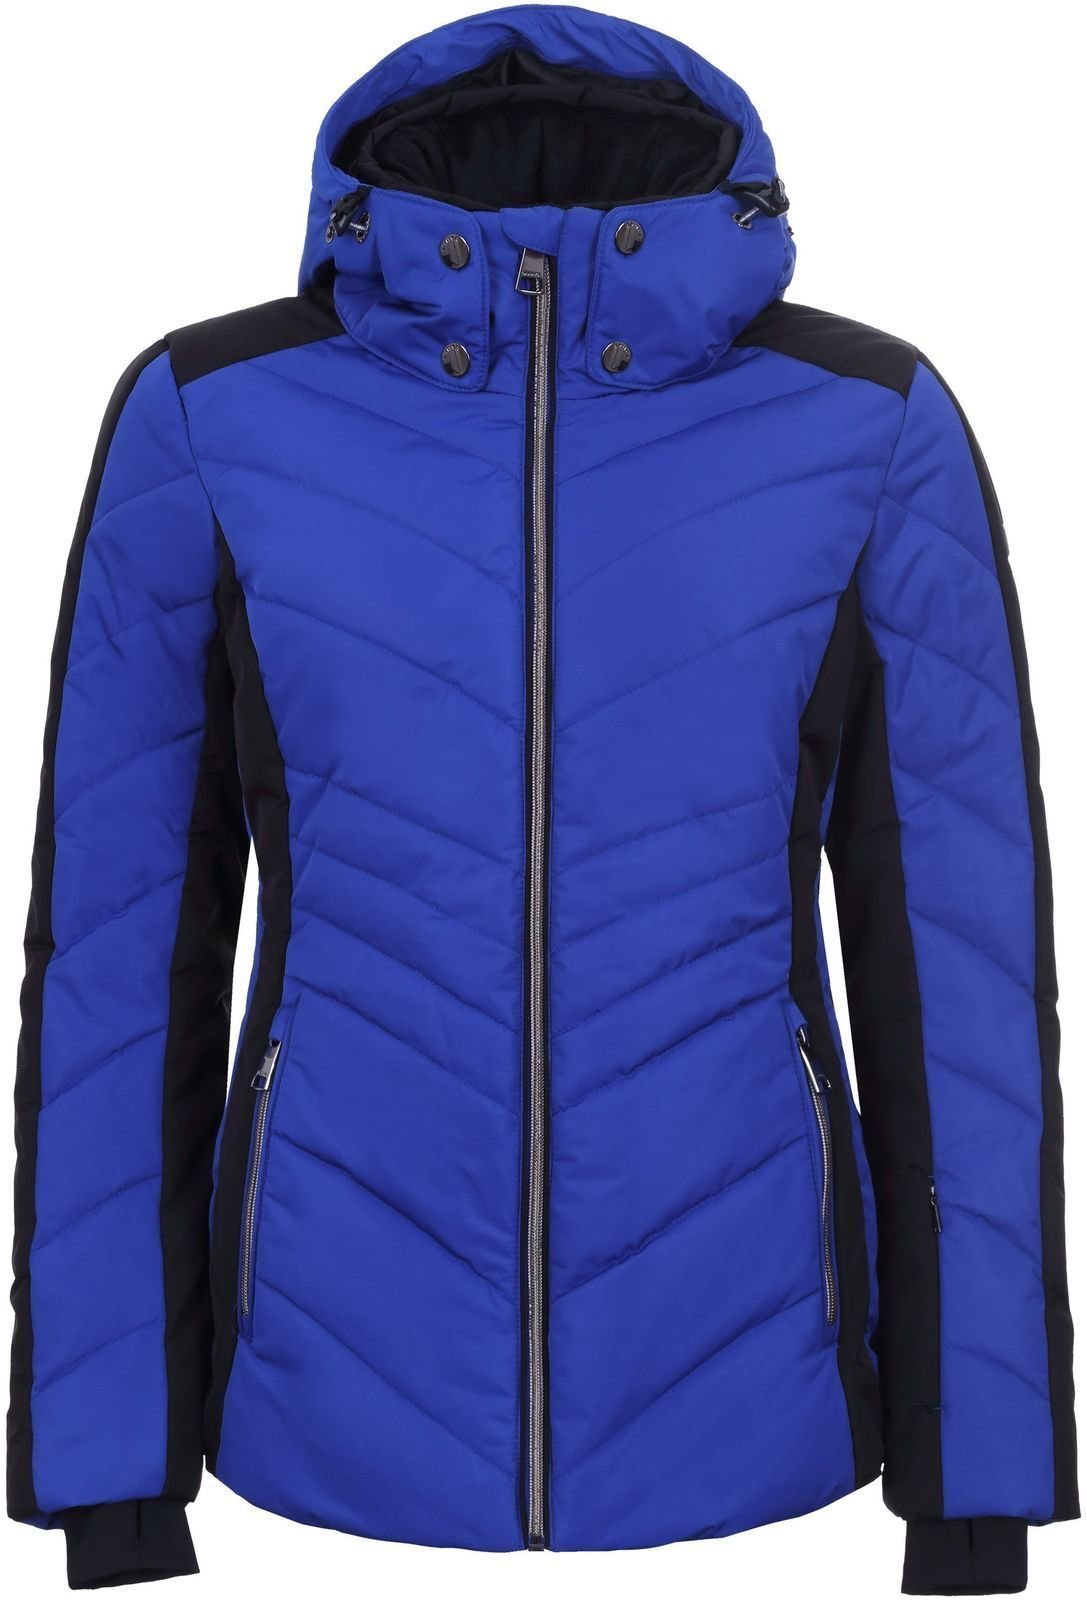 Jachetă schi Luhta Jalasjoki Womens Ski Jacket Albastru Regal 38